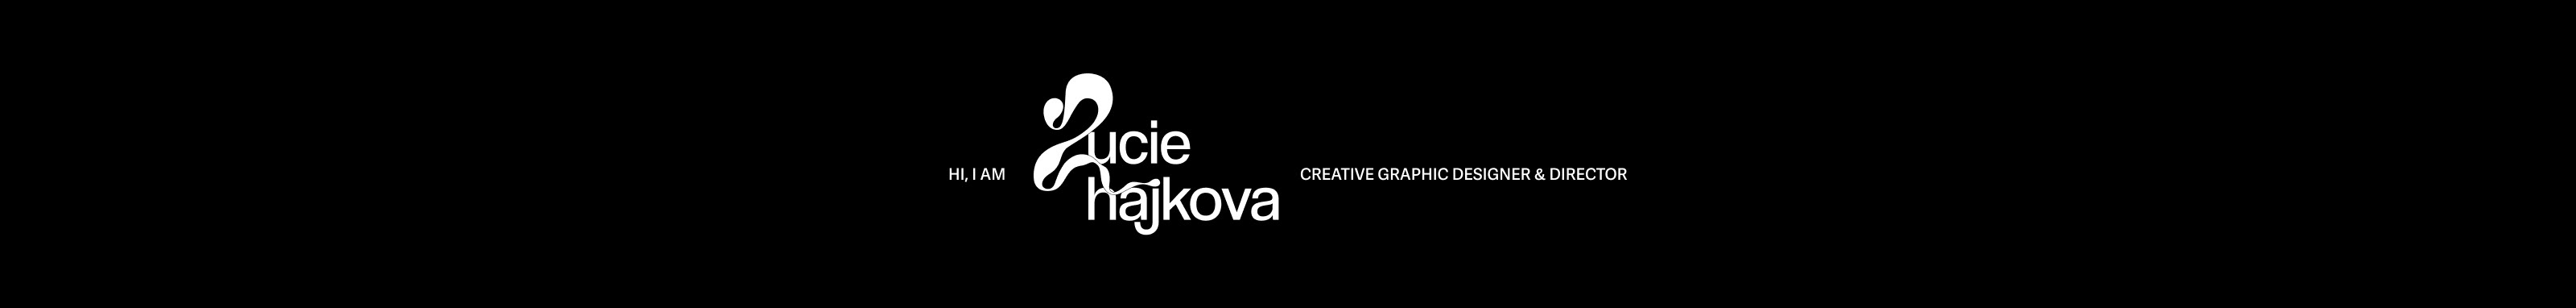 Lucie Hajková's profile banner